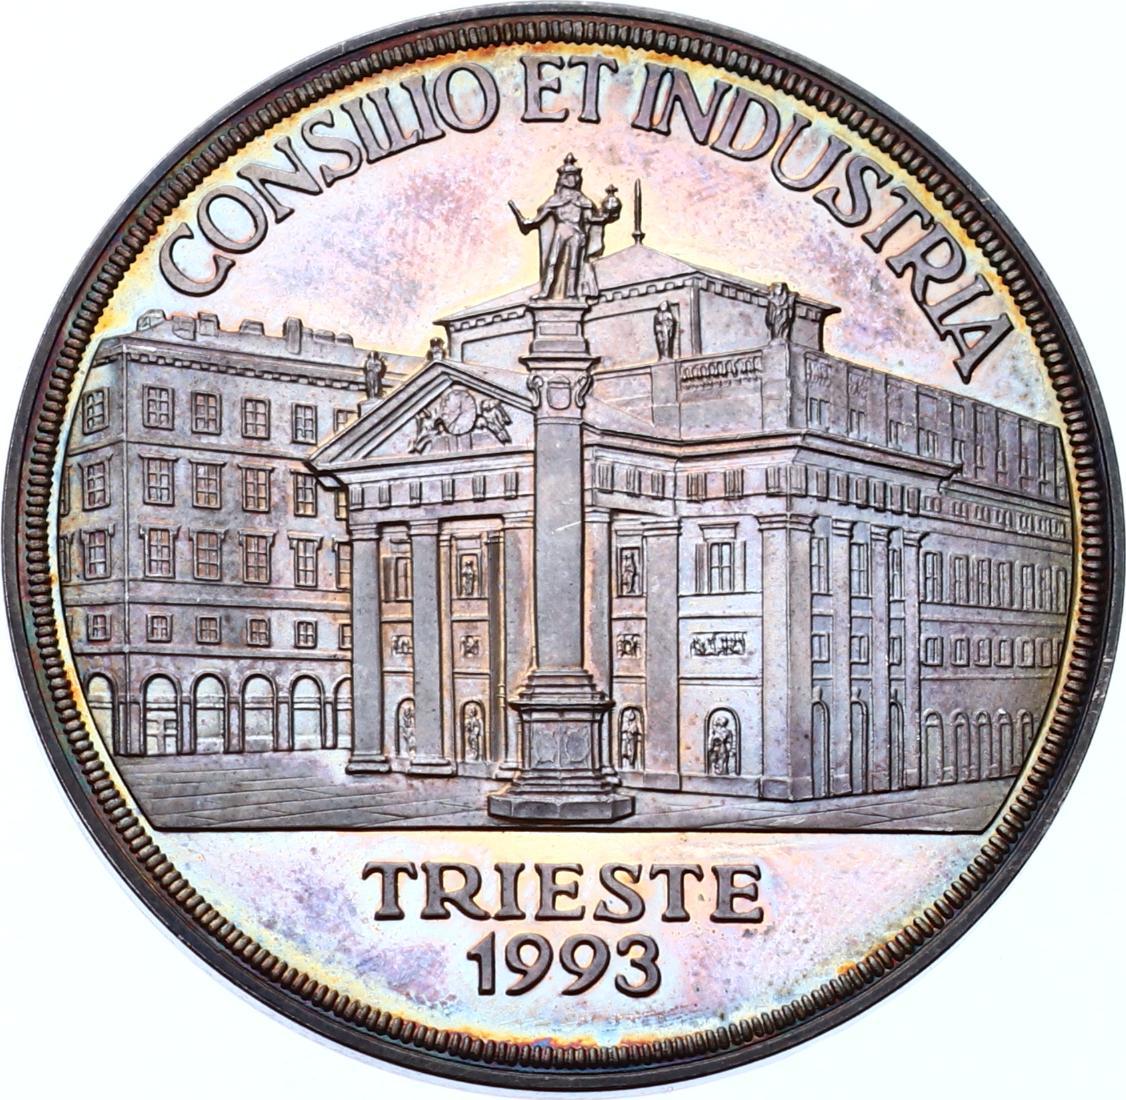 1993 İtalya Triesete Şehri Consilio Et Industria Gümüş Madalyon